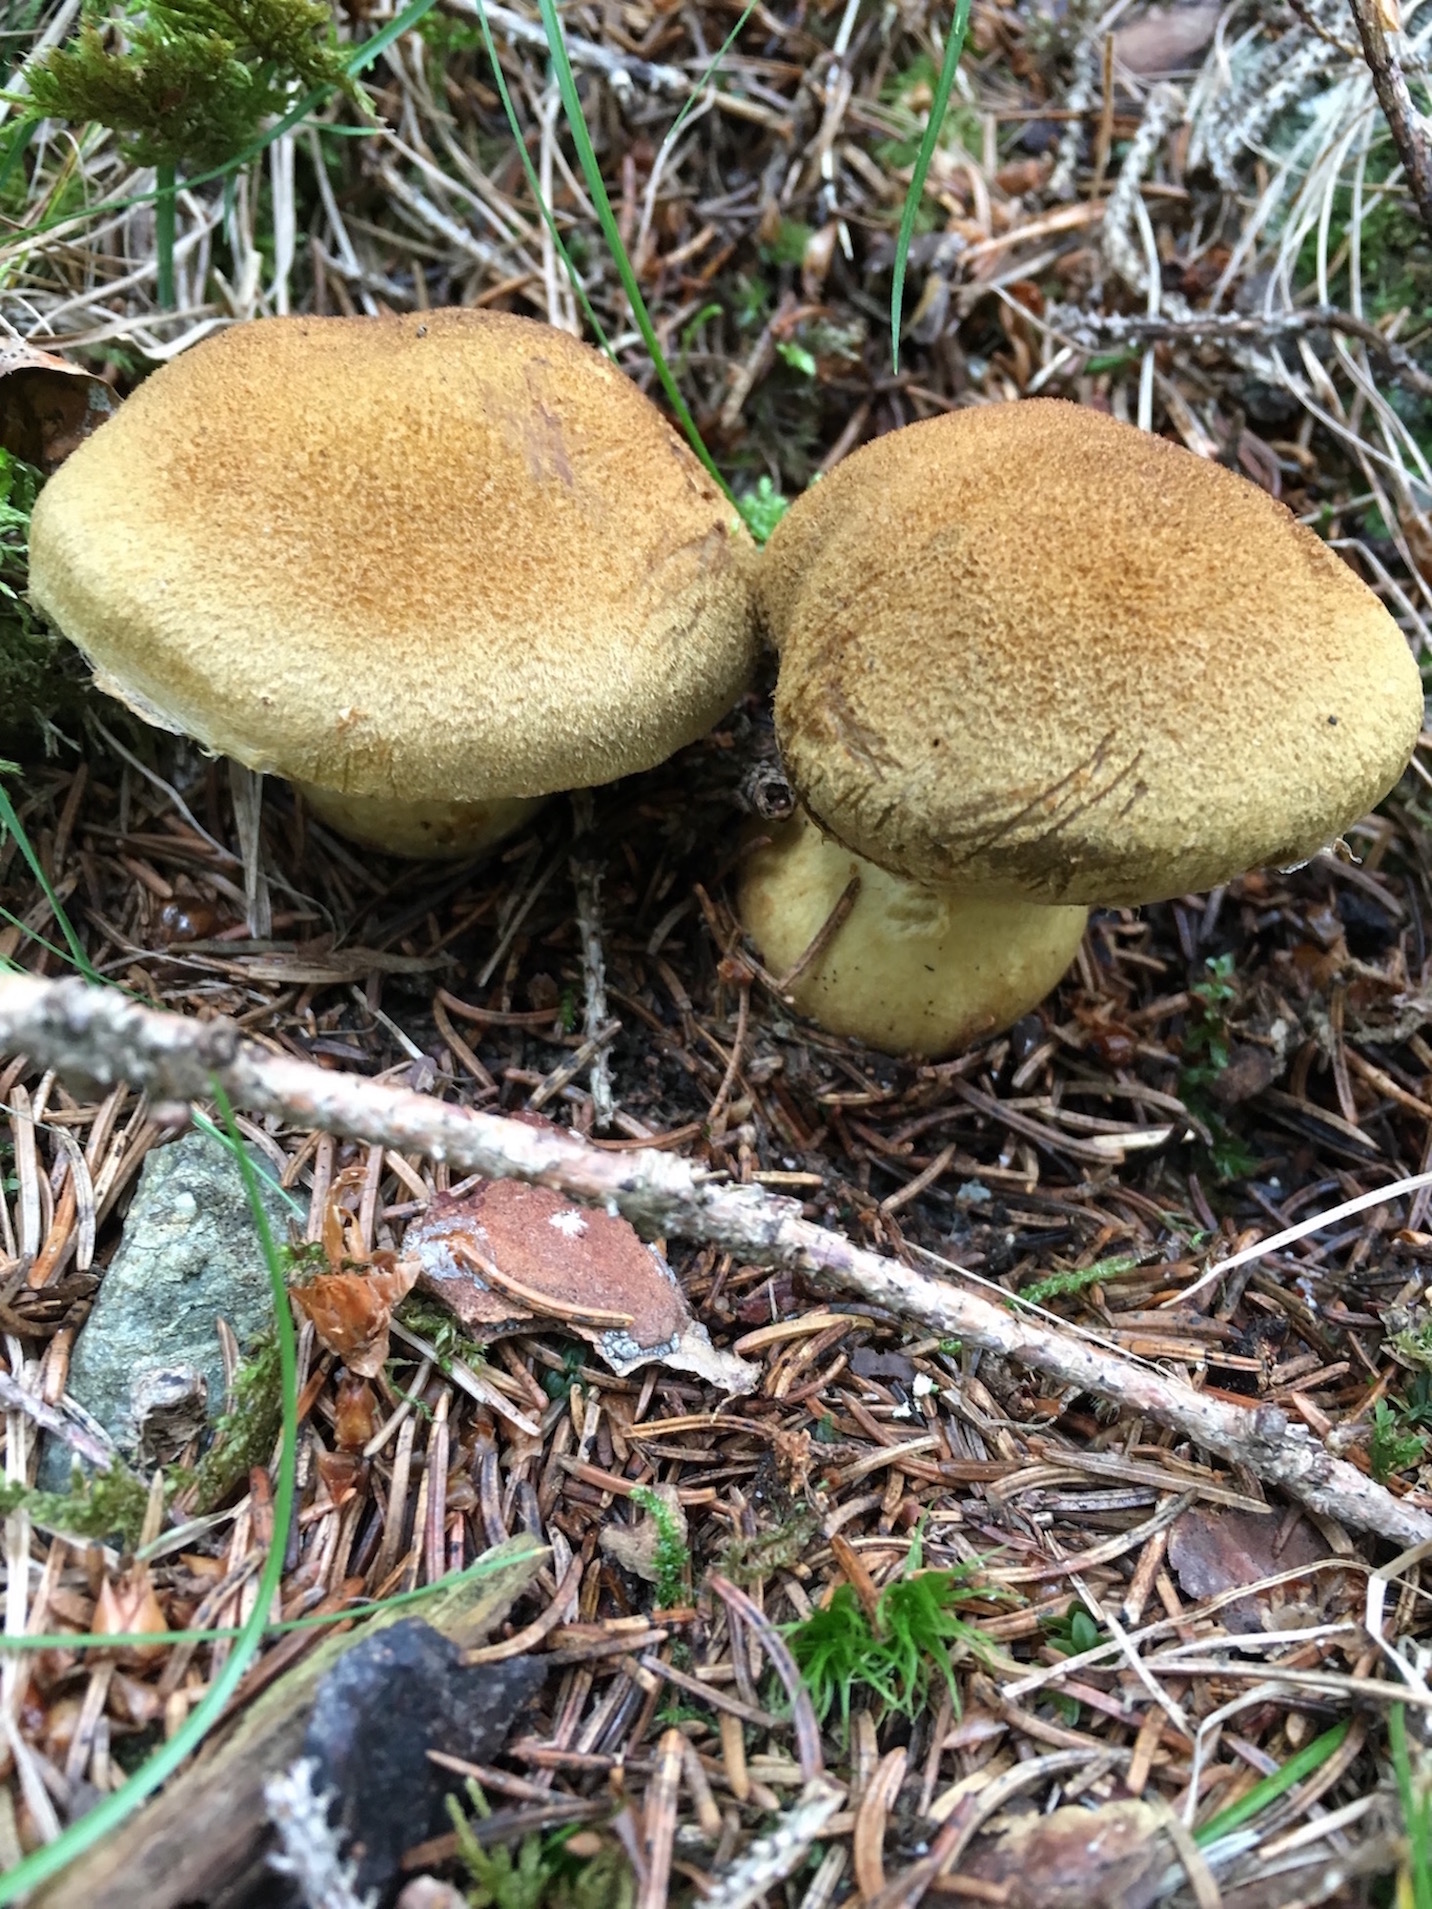 Unidentified mushrooms